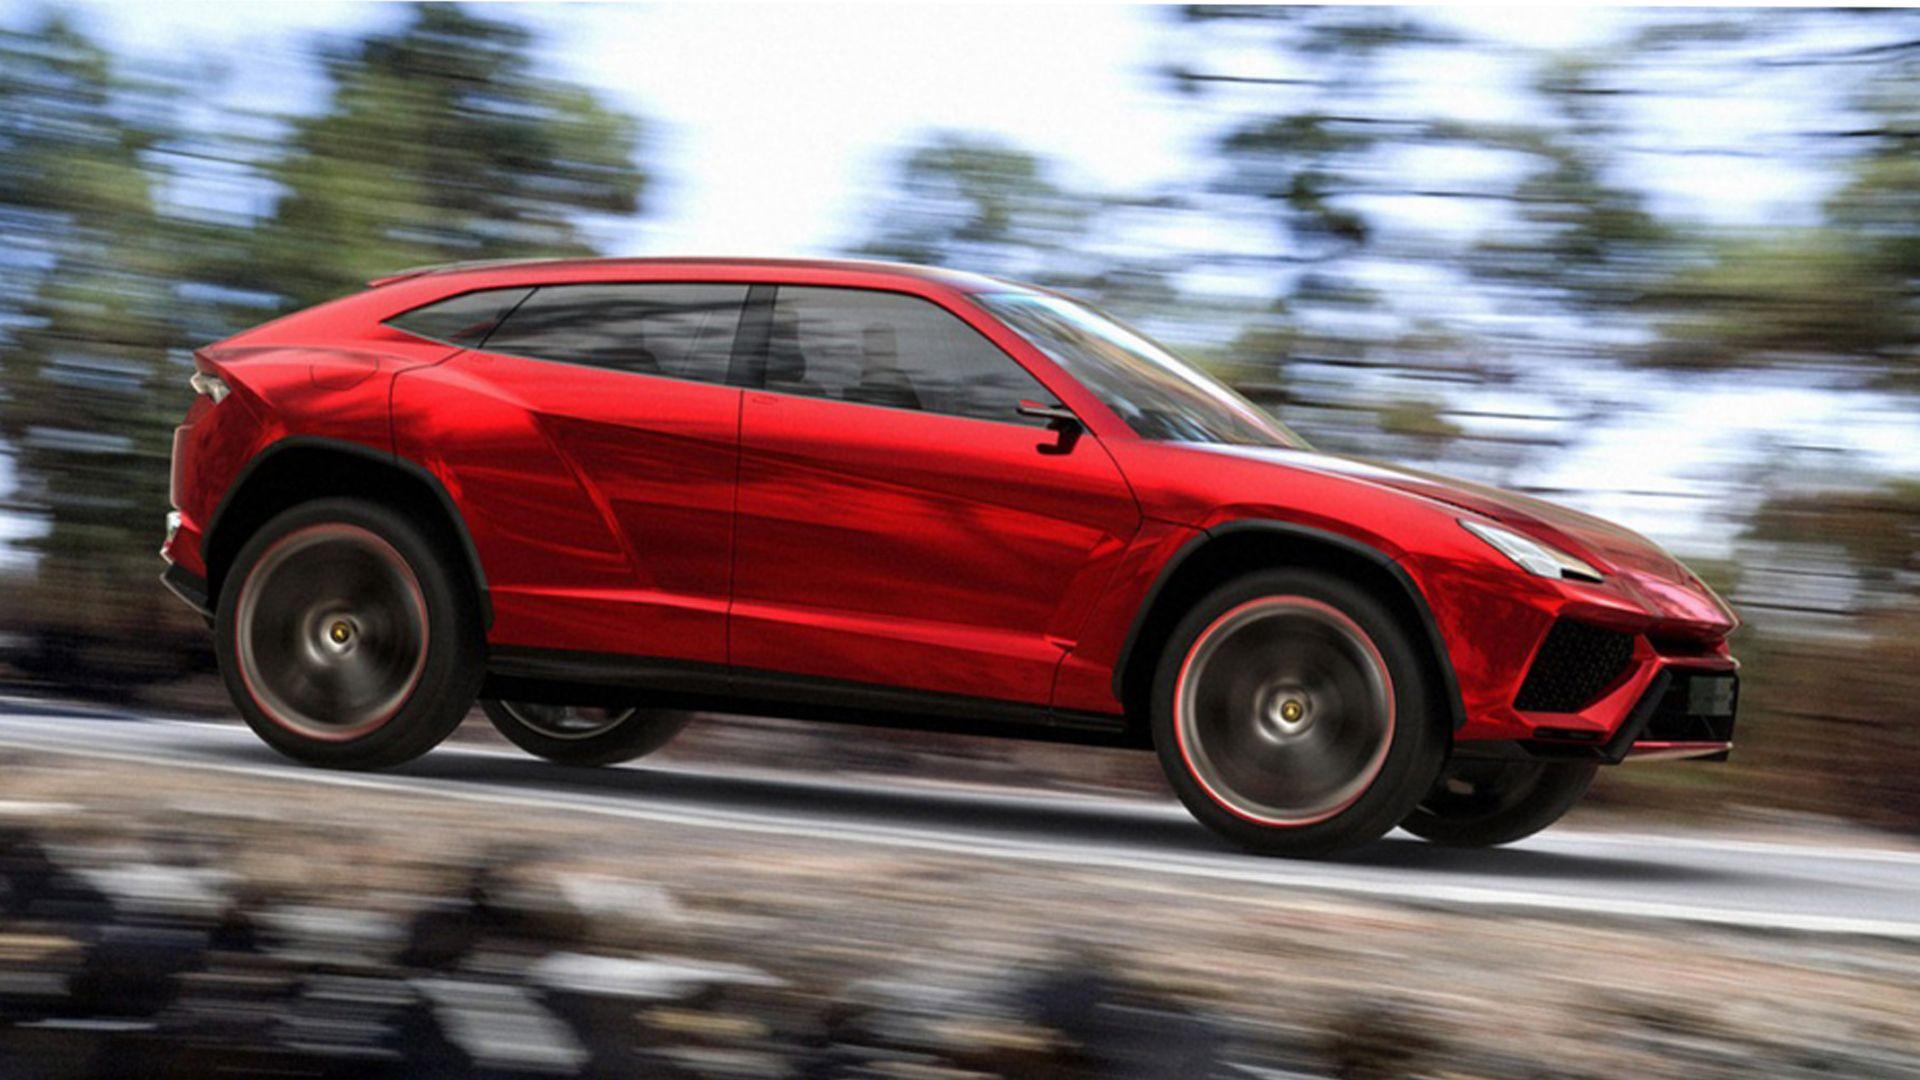 Exclusive: Lamborghini Urus SUV Production Decision to be Made